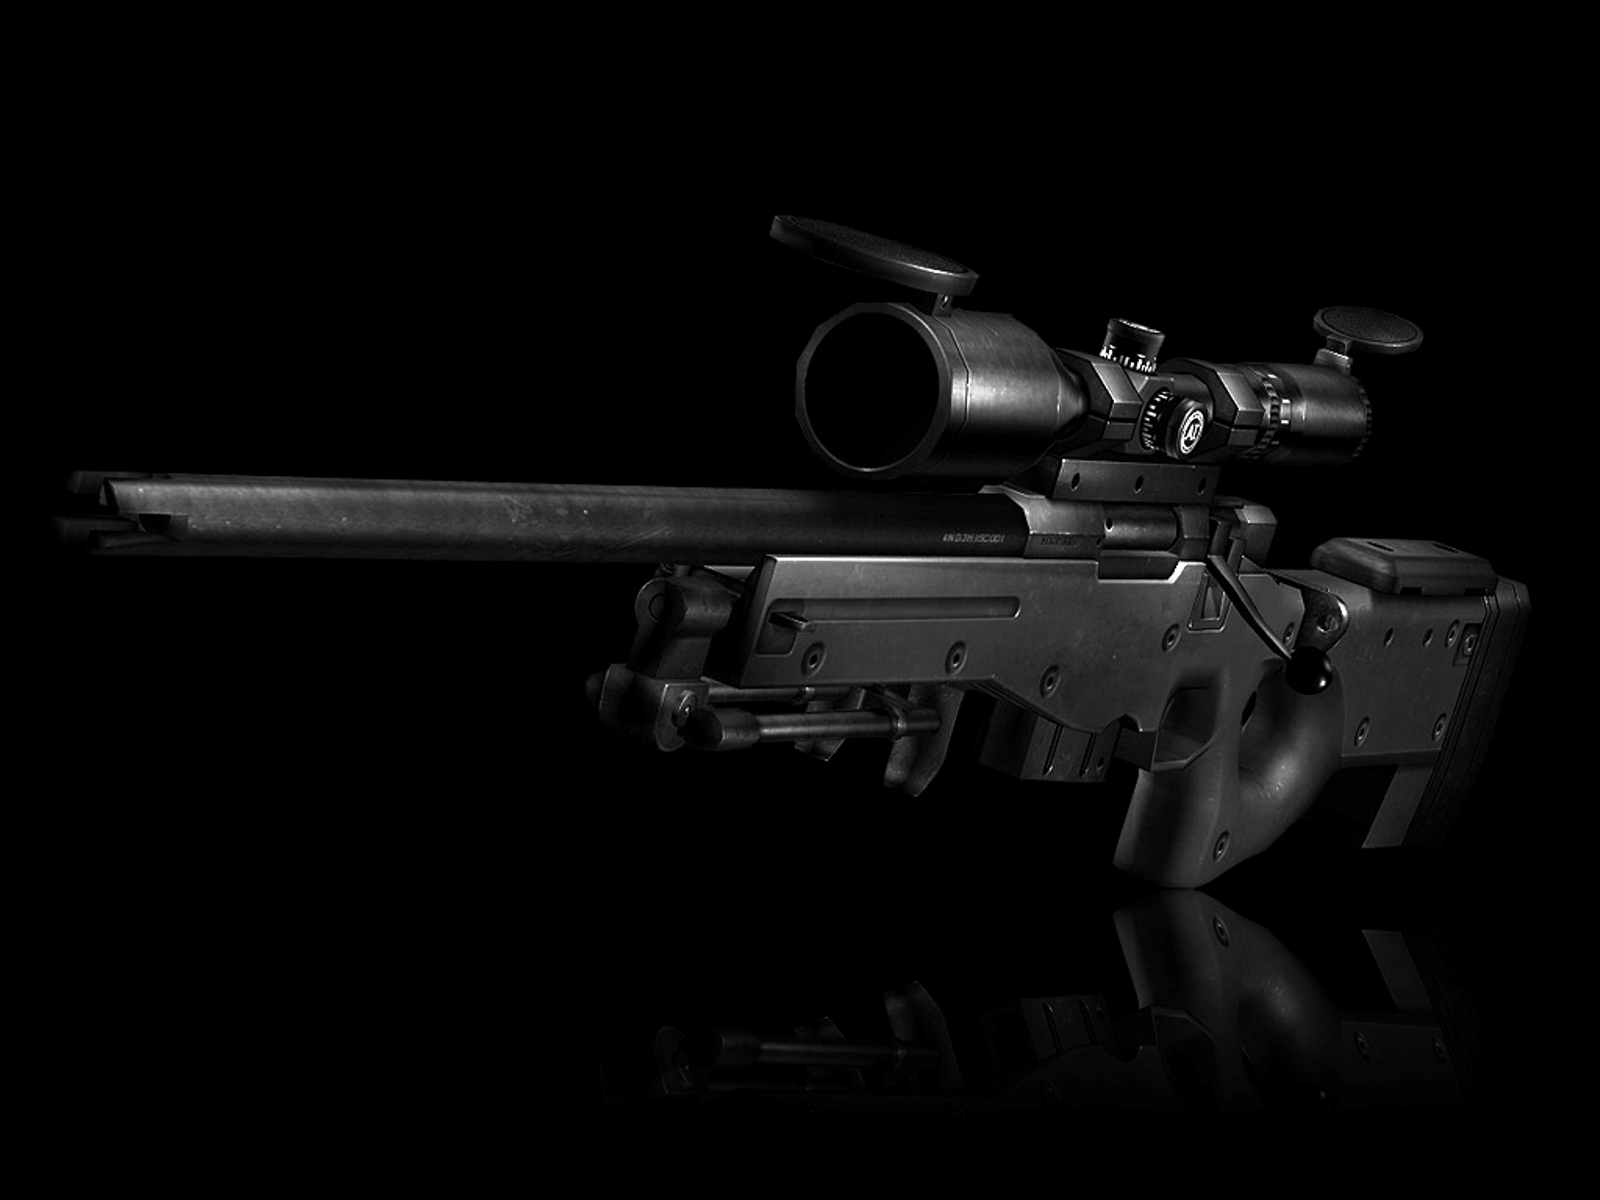 Sniper Rifle Computer Wallpapers Desktop Backgrounds 1600x1200 ID